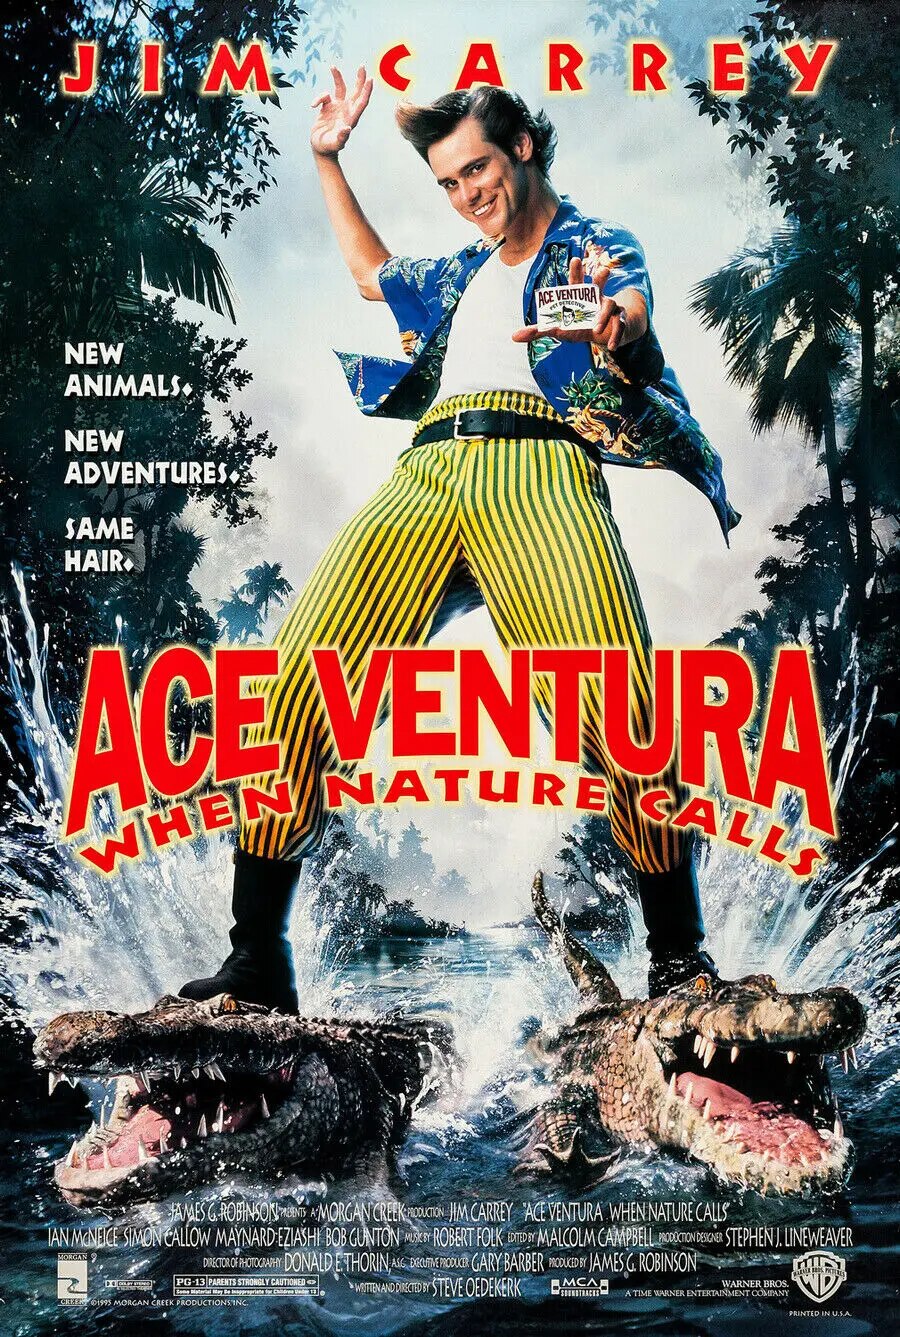 Ace Ventura When Nature Calls - Jim Carrey Comedy Movie Poster-30x45cm-